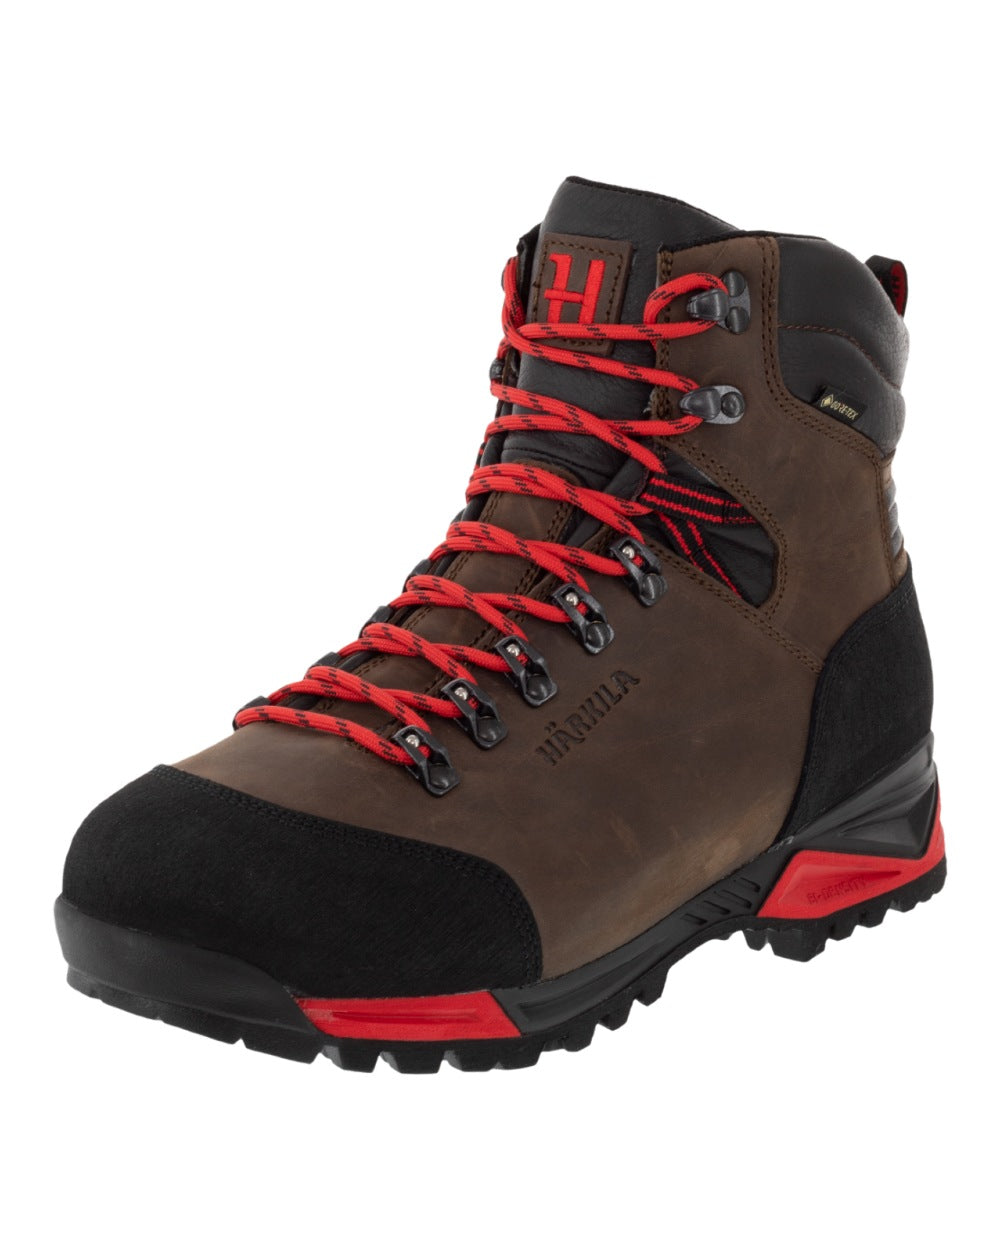 Harkila Forest Hunter Mid GTX Boots in Dark Brown 